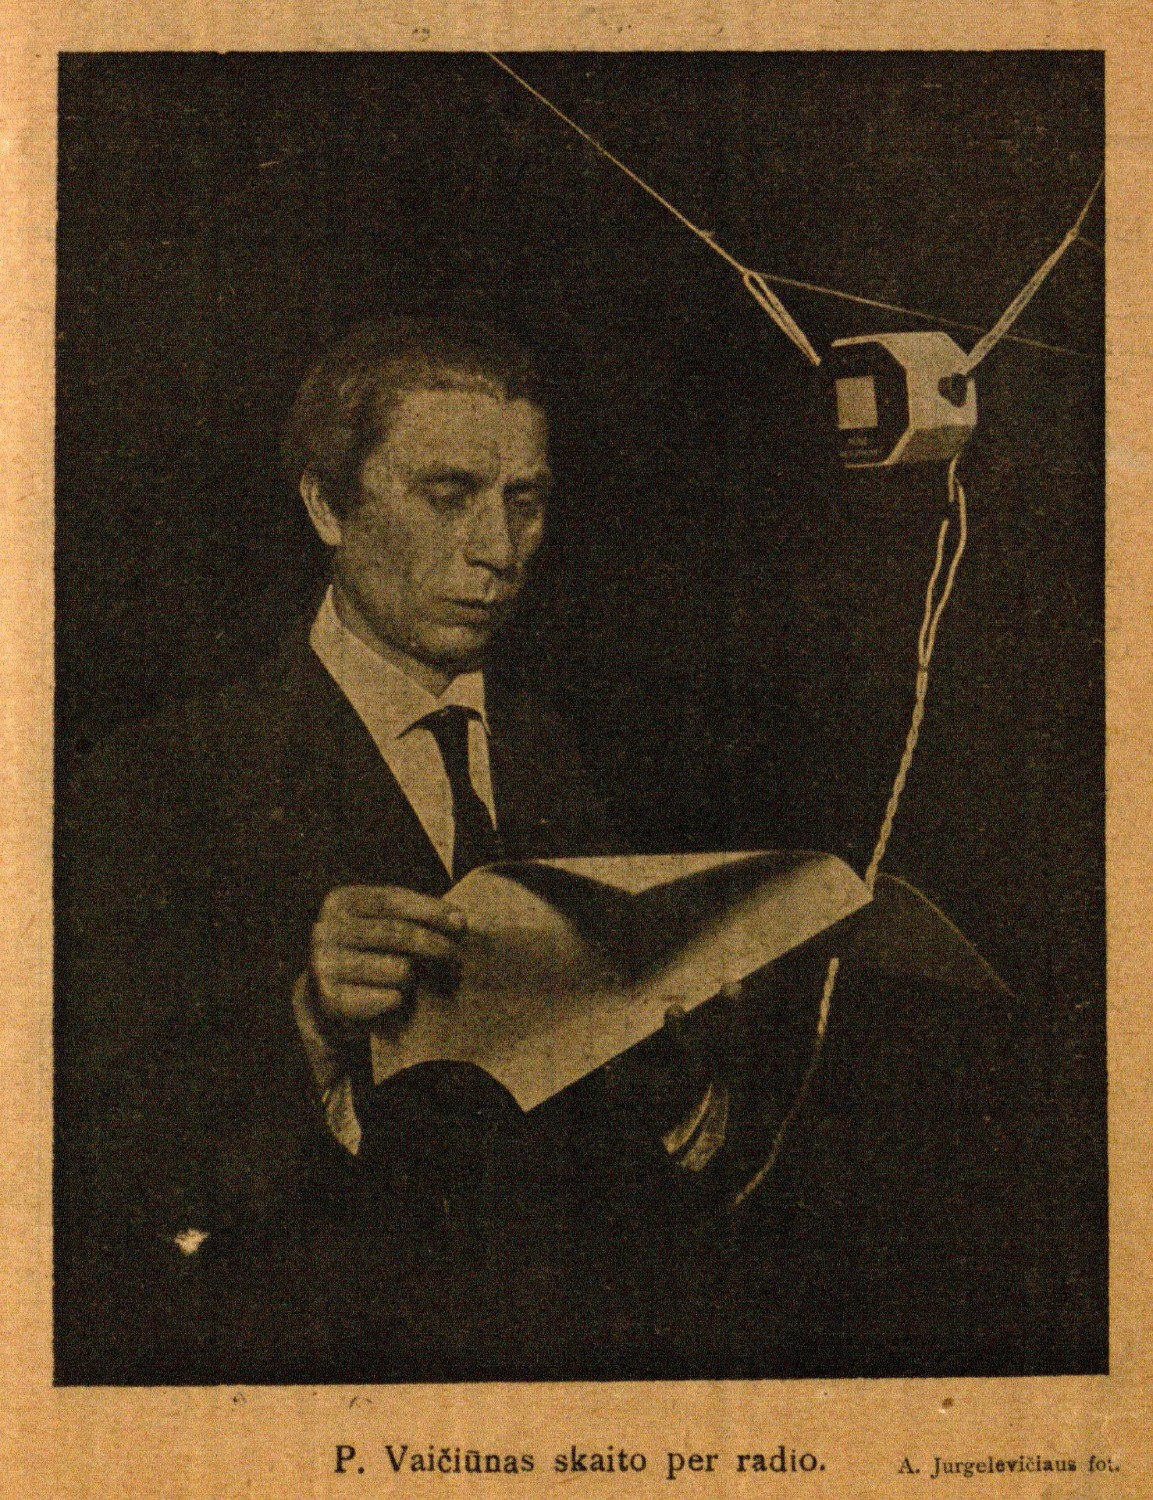 P. Vaičiūnas skaito per radio: A. Jurgelionio foto // 7 meno dienos. – 1927, Nr. 7, p. 1.